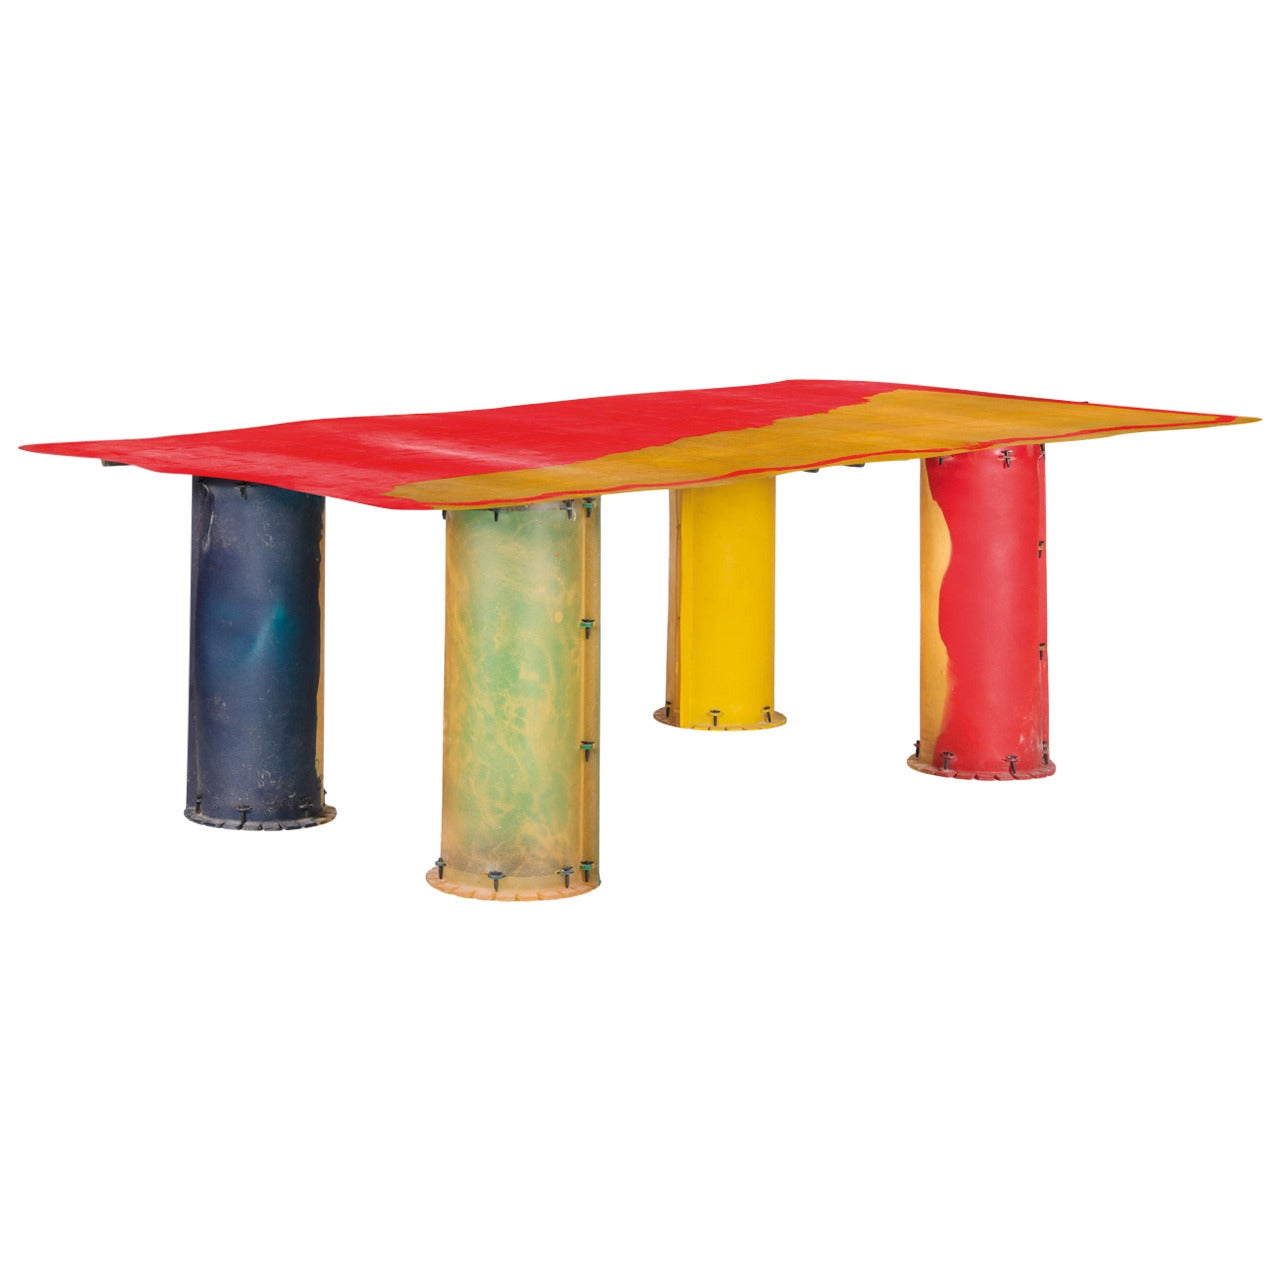 Gaetano Pesce Red Polyurethane Resin Table with Fish Design, circa 2000, Italy